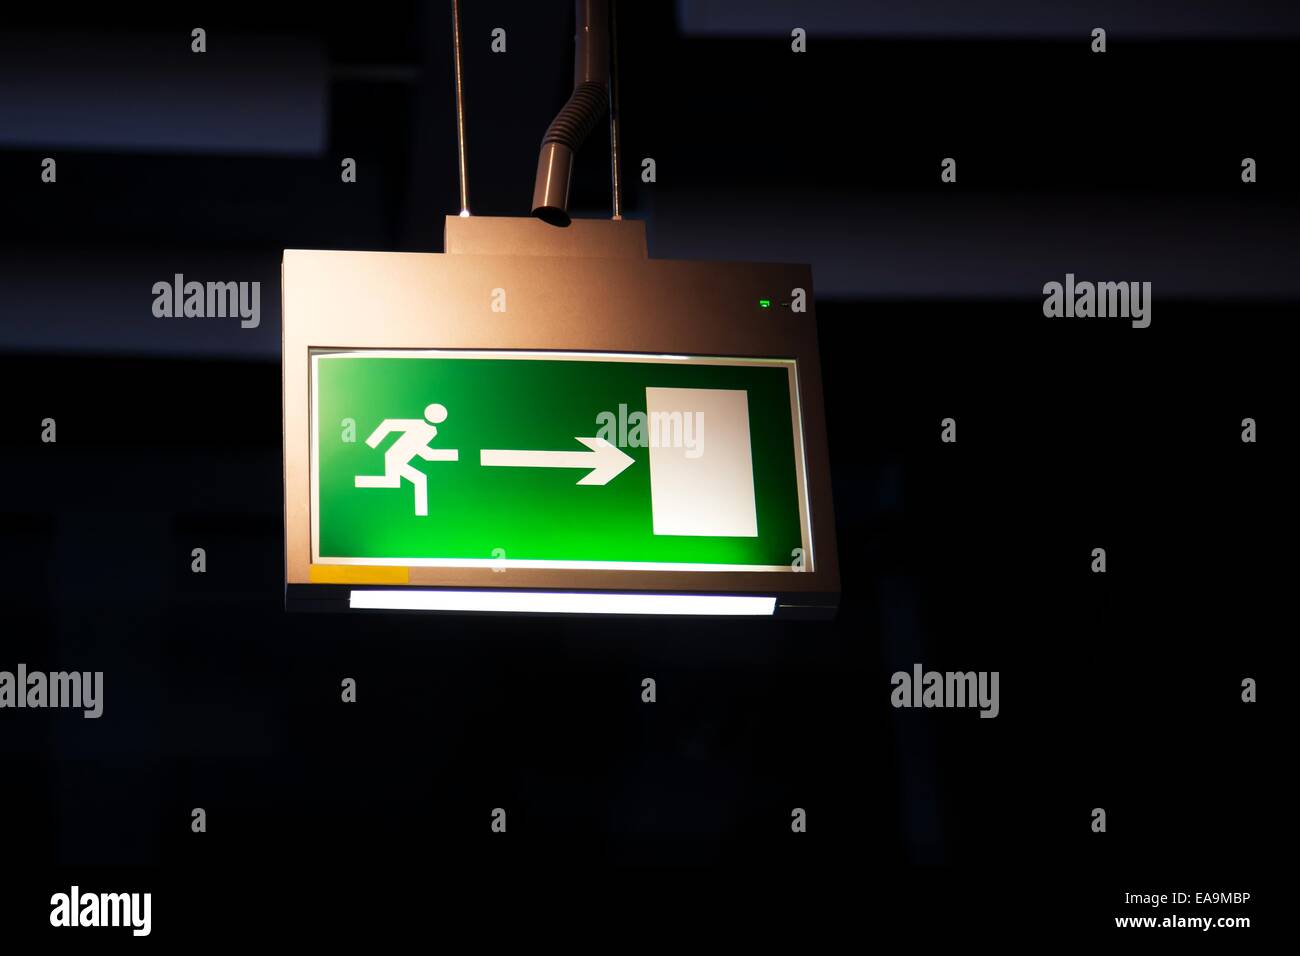 Emergency exit, illuminated board Stock Photo